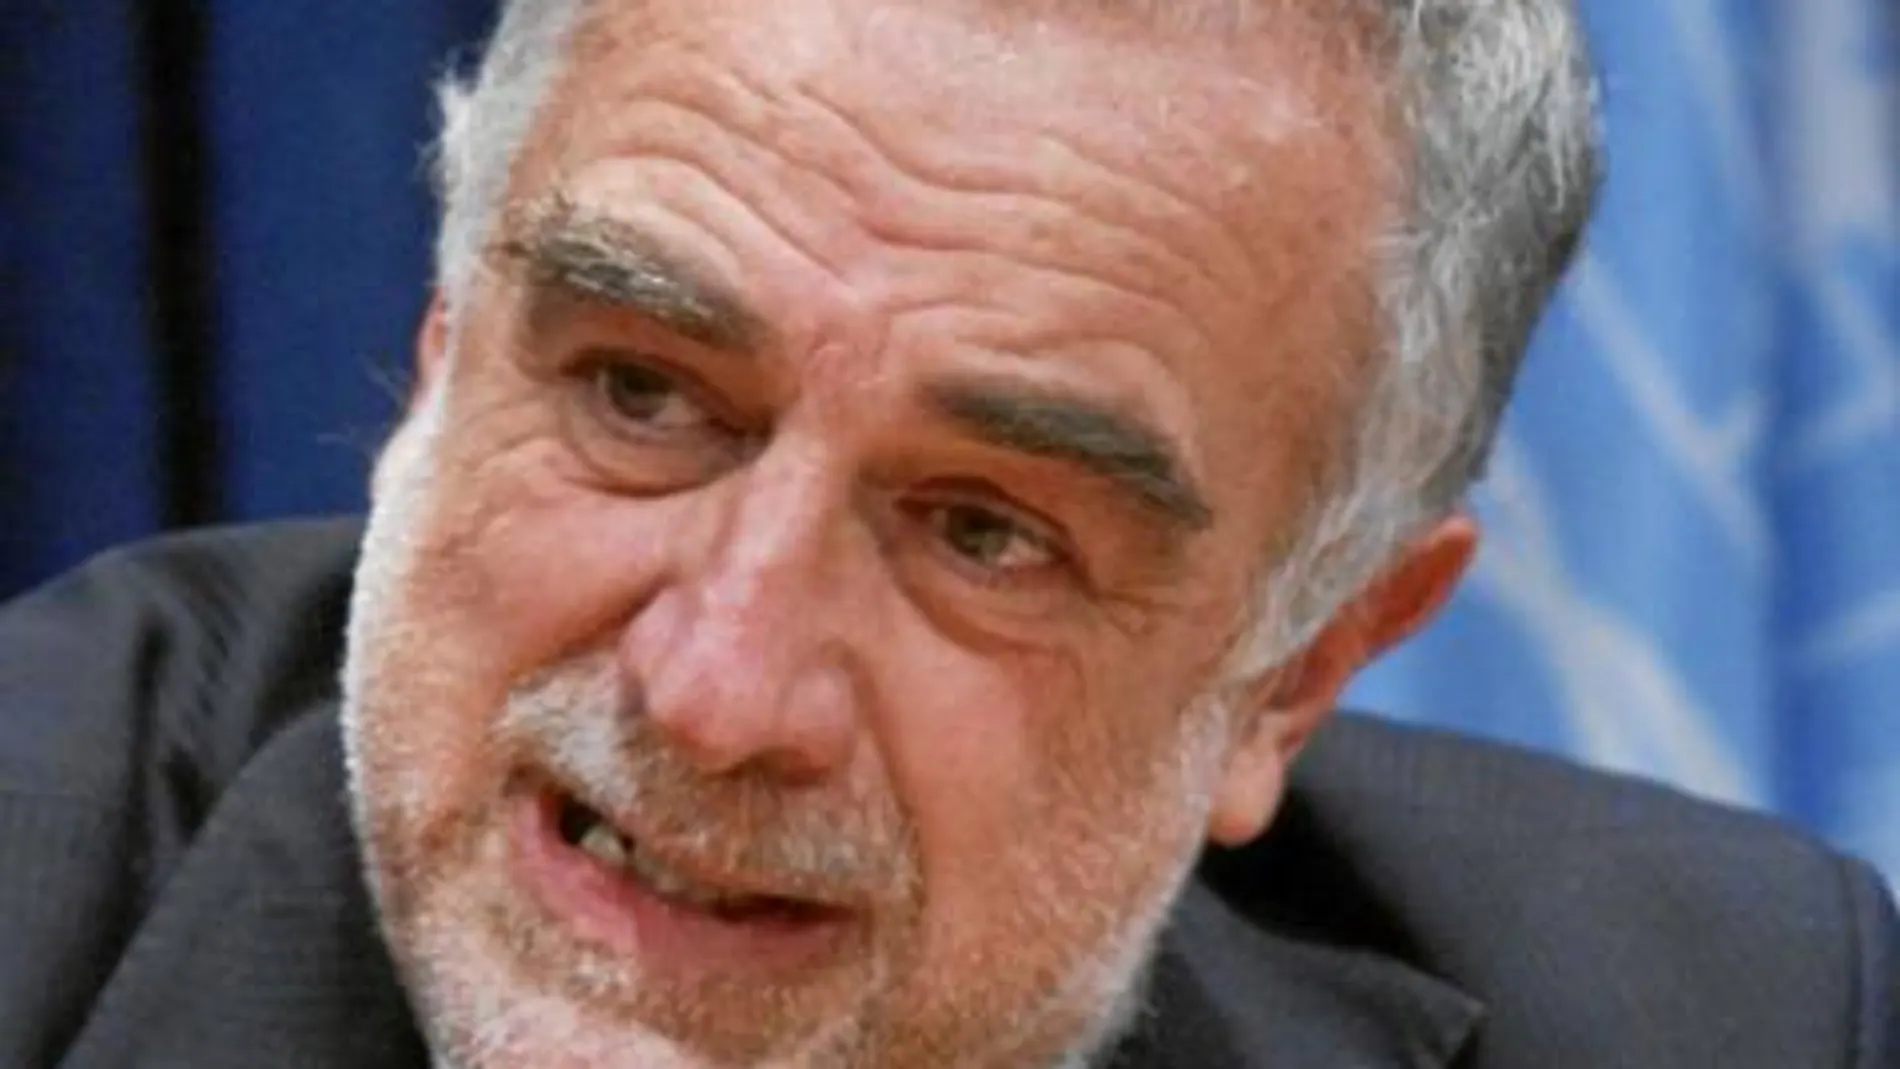 Luis Moreno Ocampo, fiscal jefe del Tribunal Penal Internacional